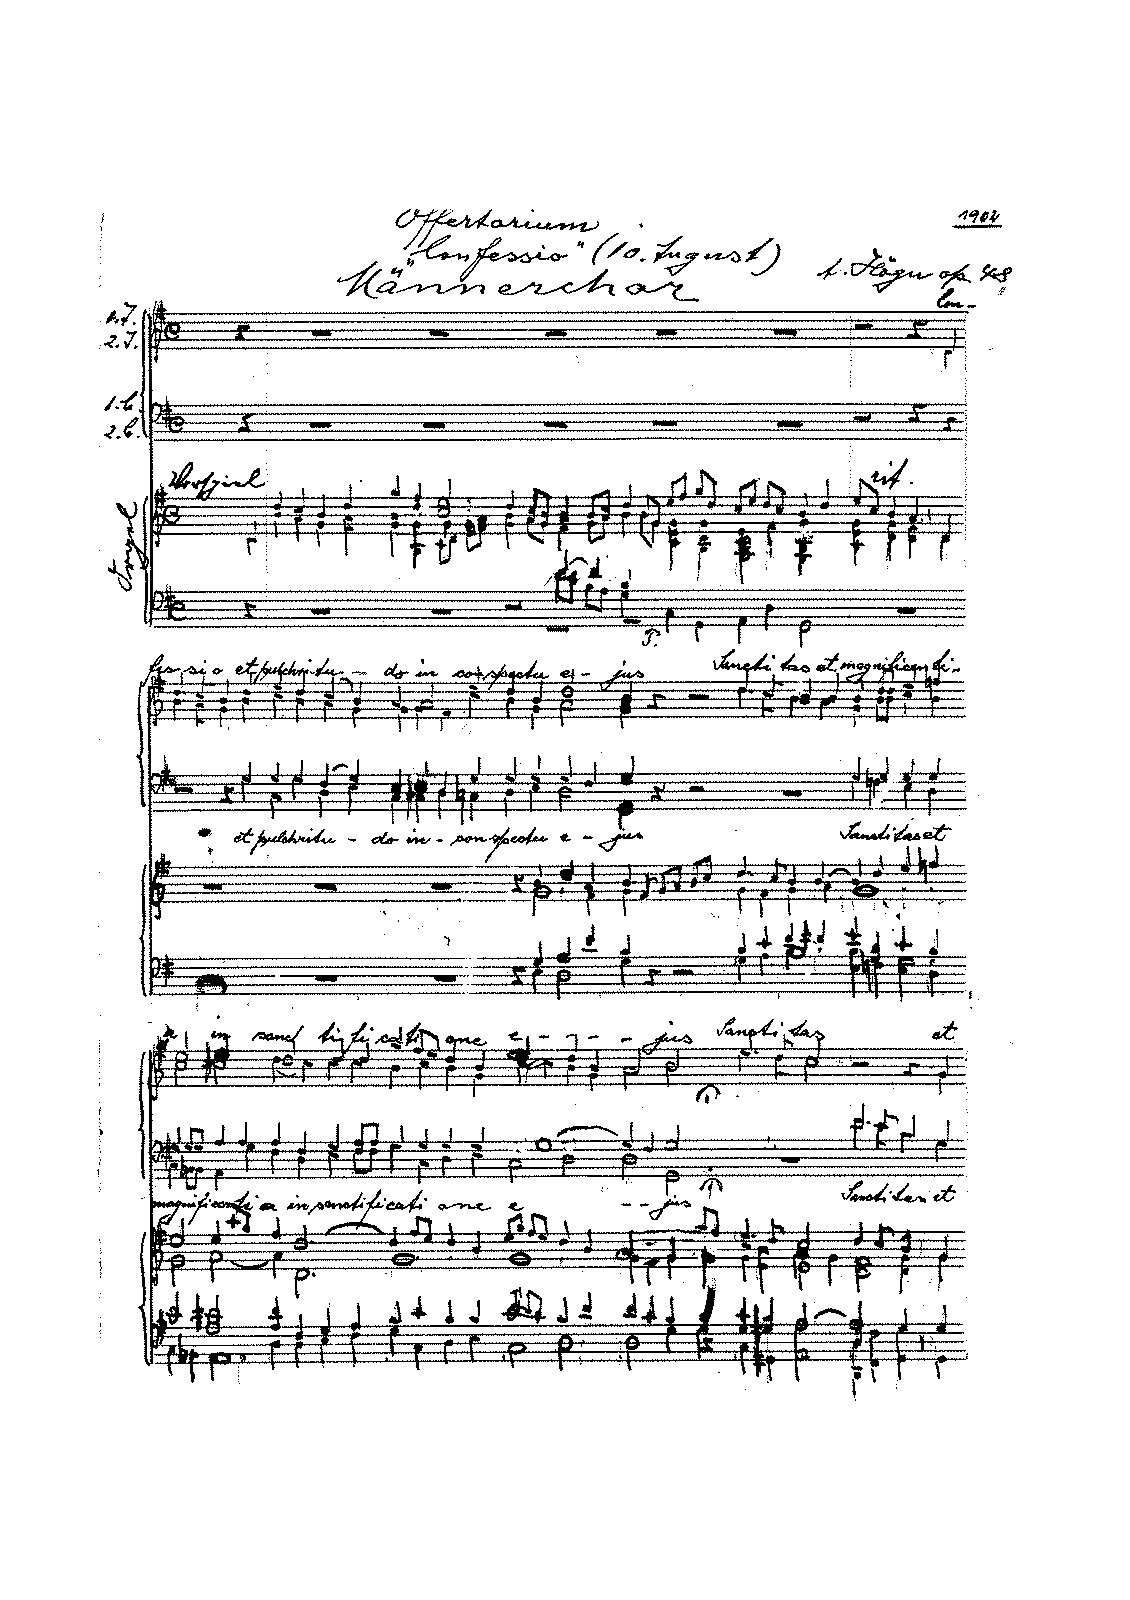 Offertorium in G major, Op.48 (Högn, August) - IMSLP